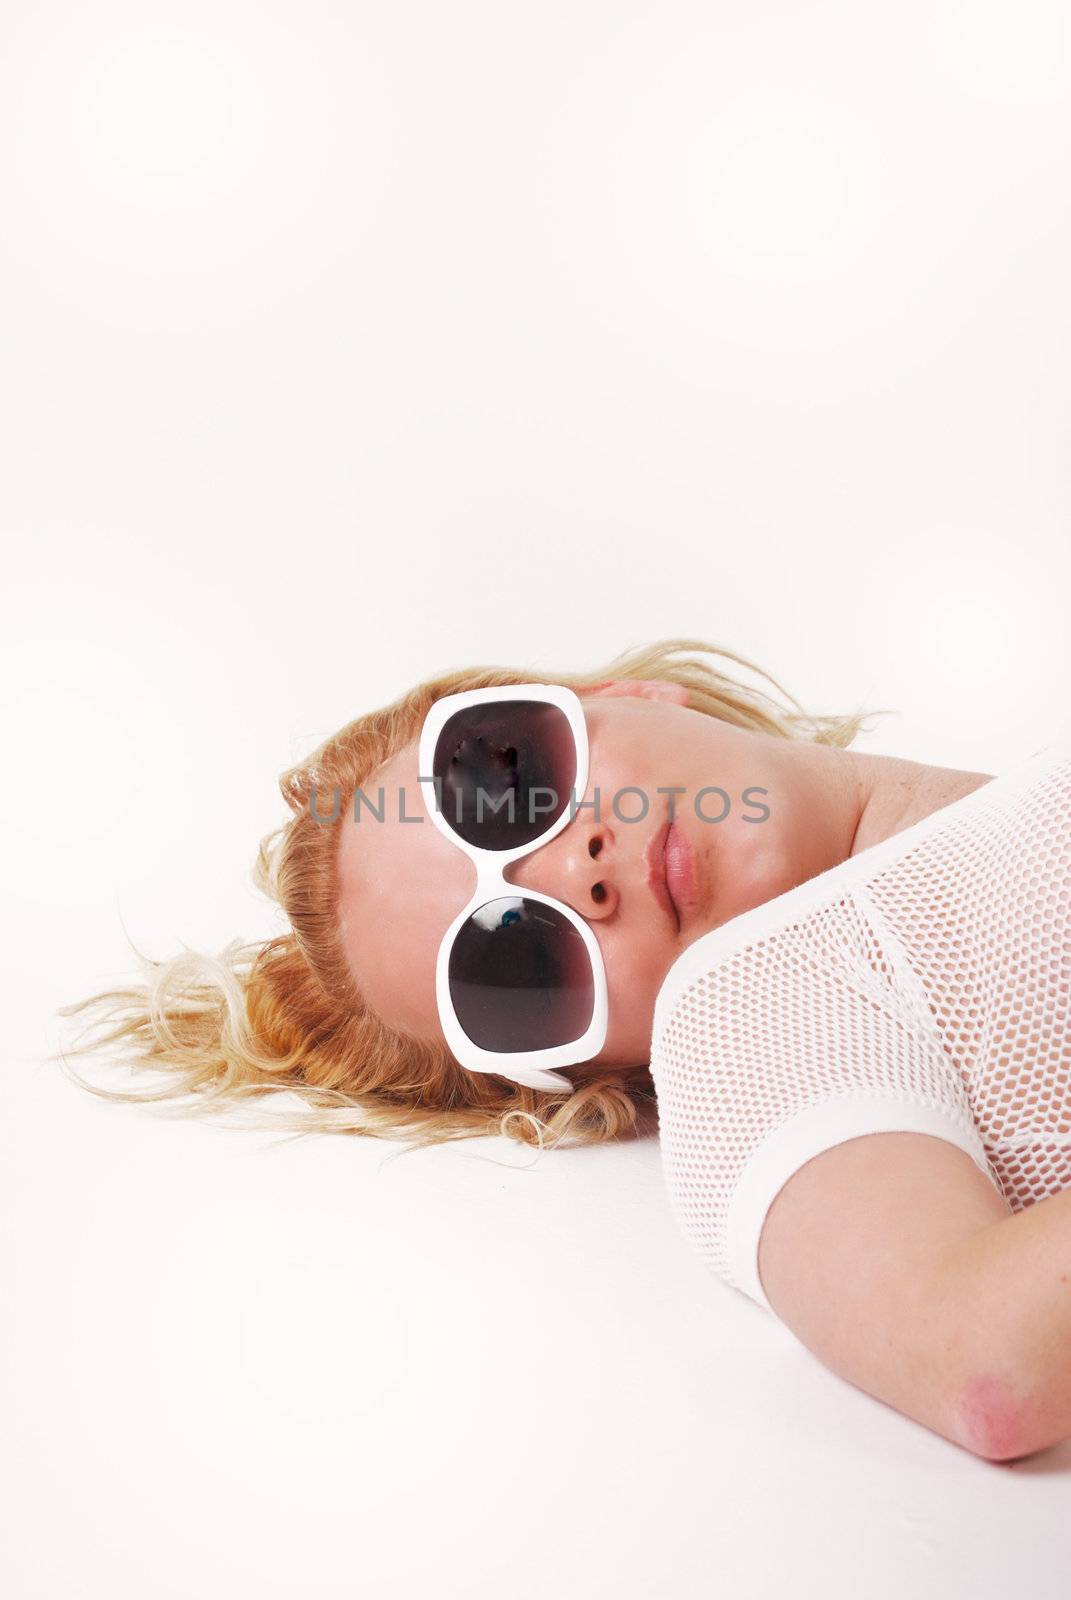 prtty girlo in sunglasses lying back